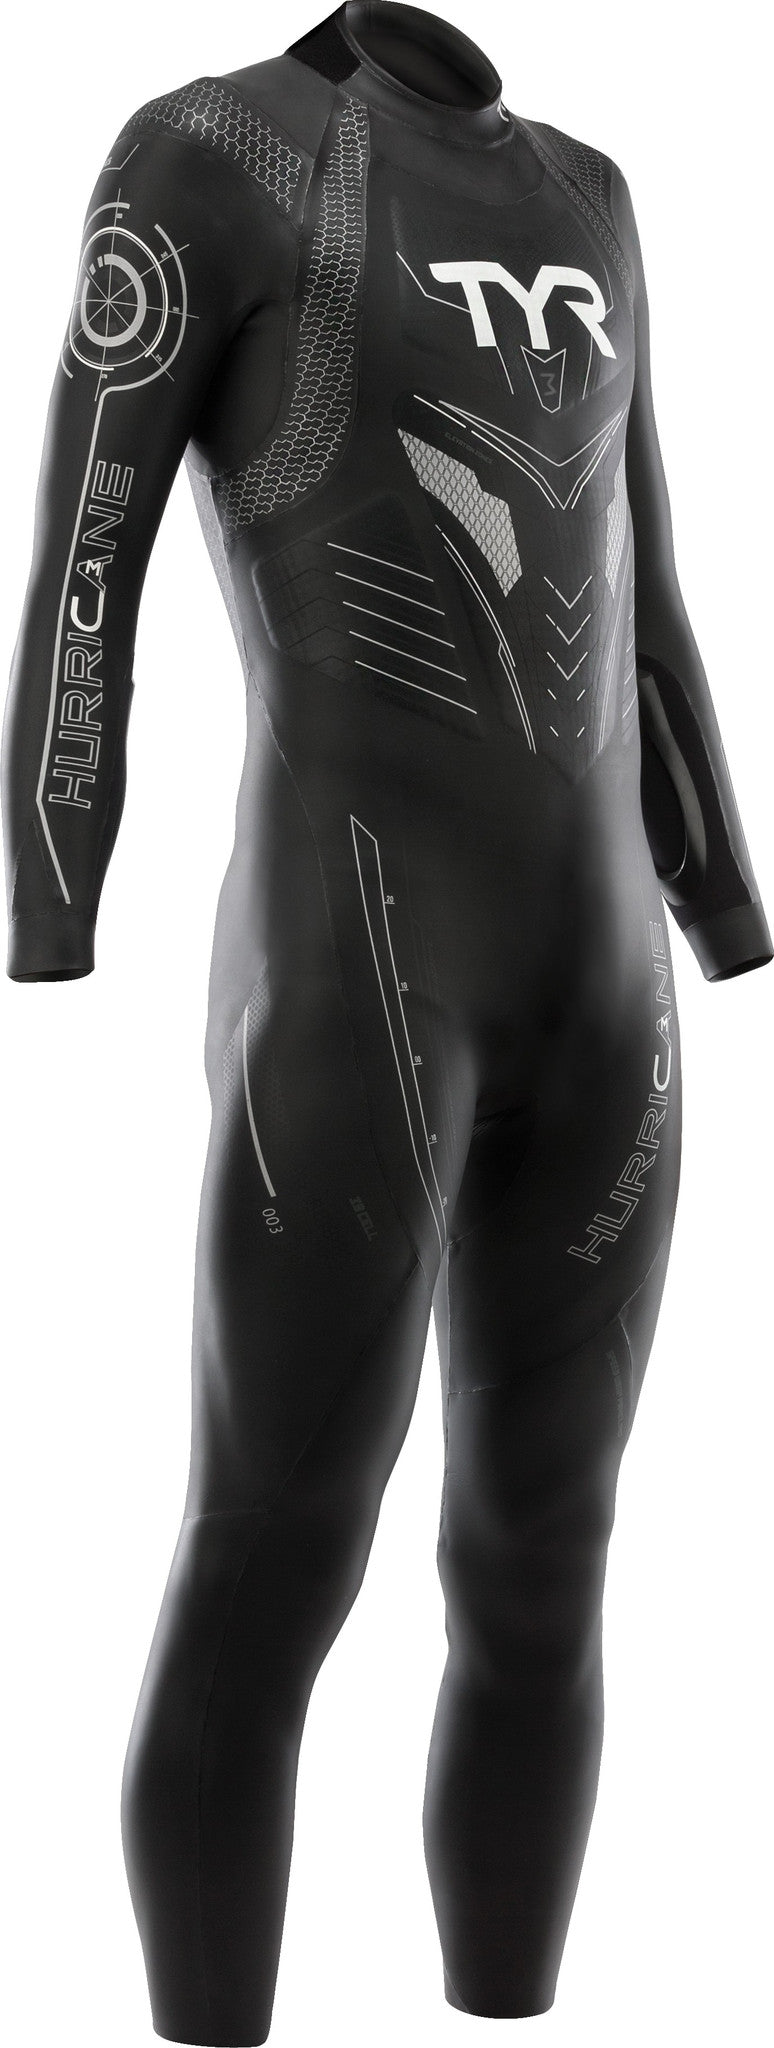 Men's Hurricane Full Suit Wetsuit Category 3